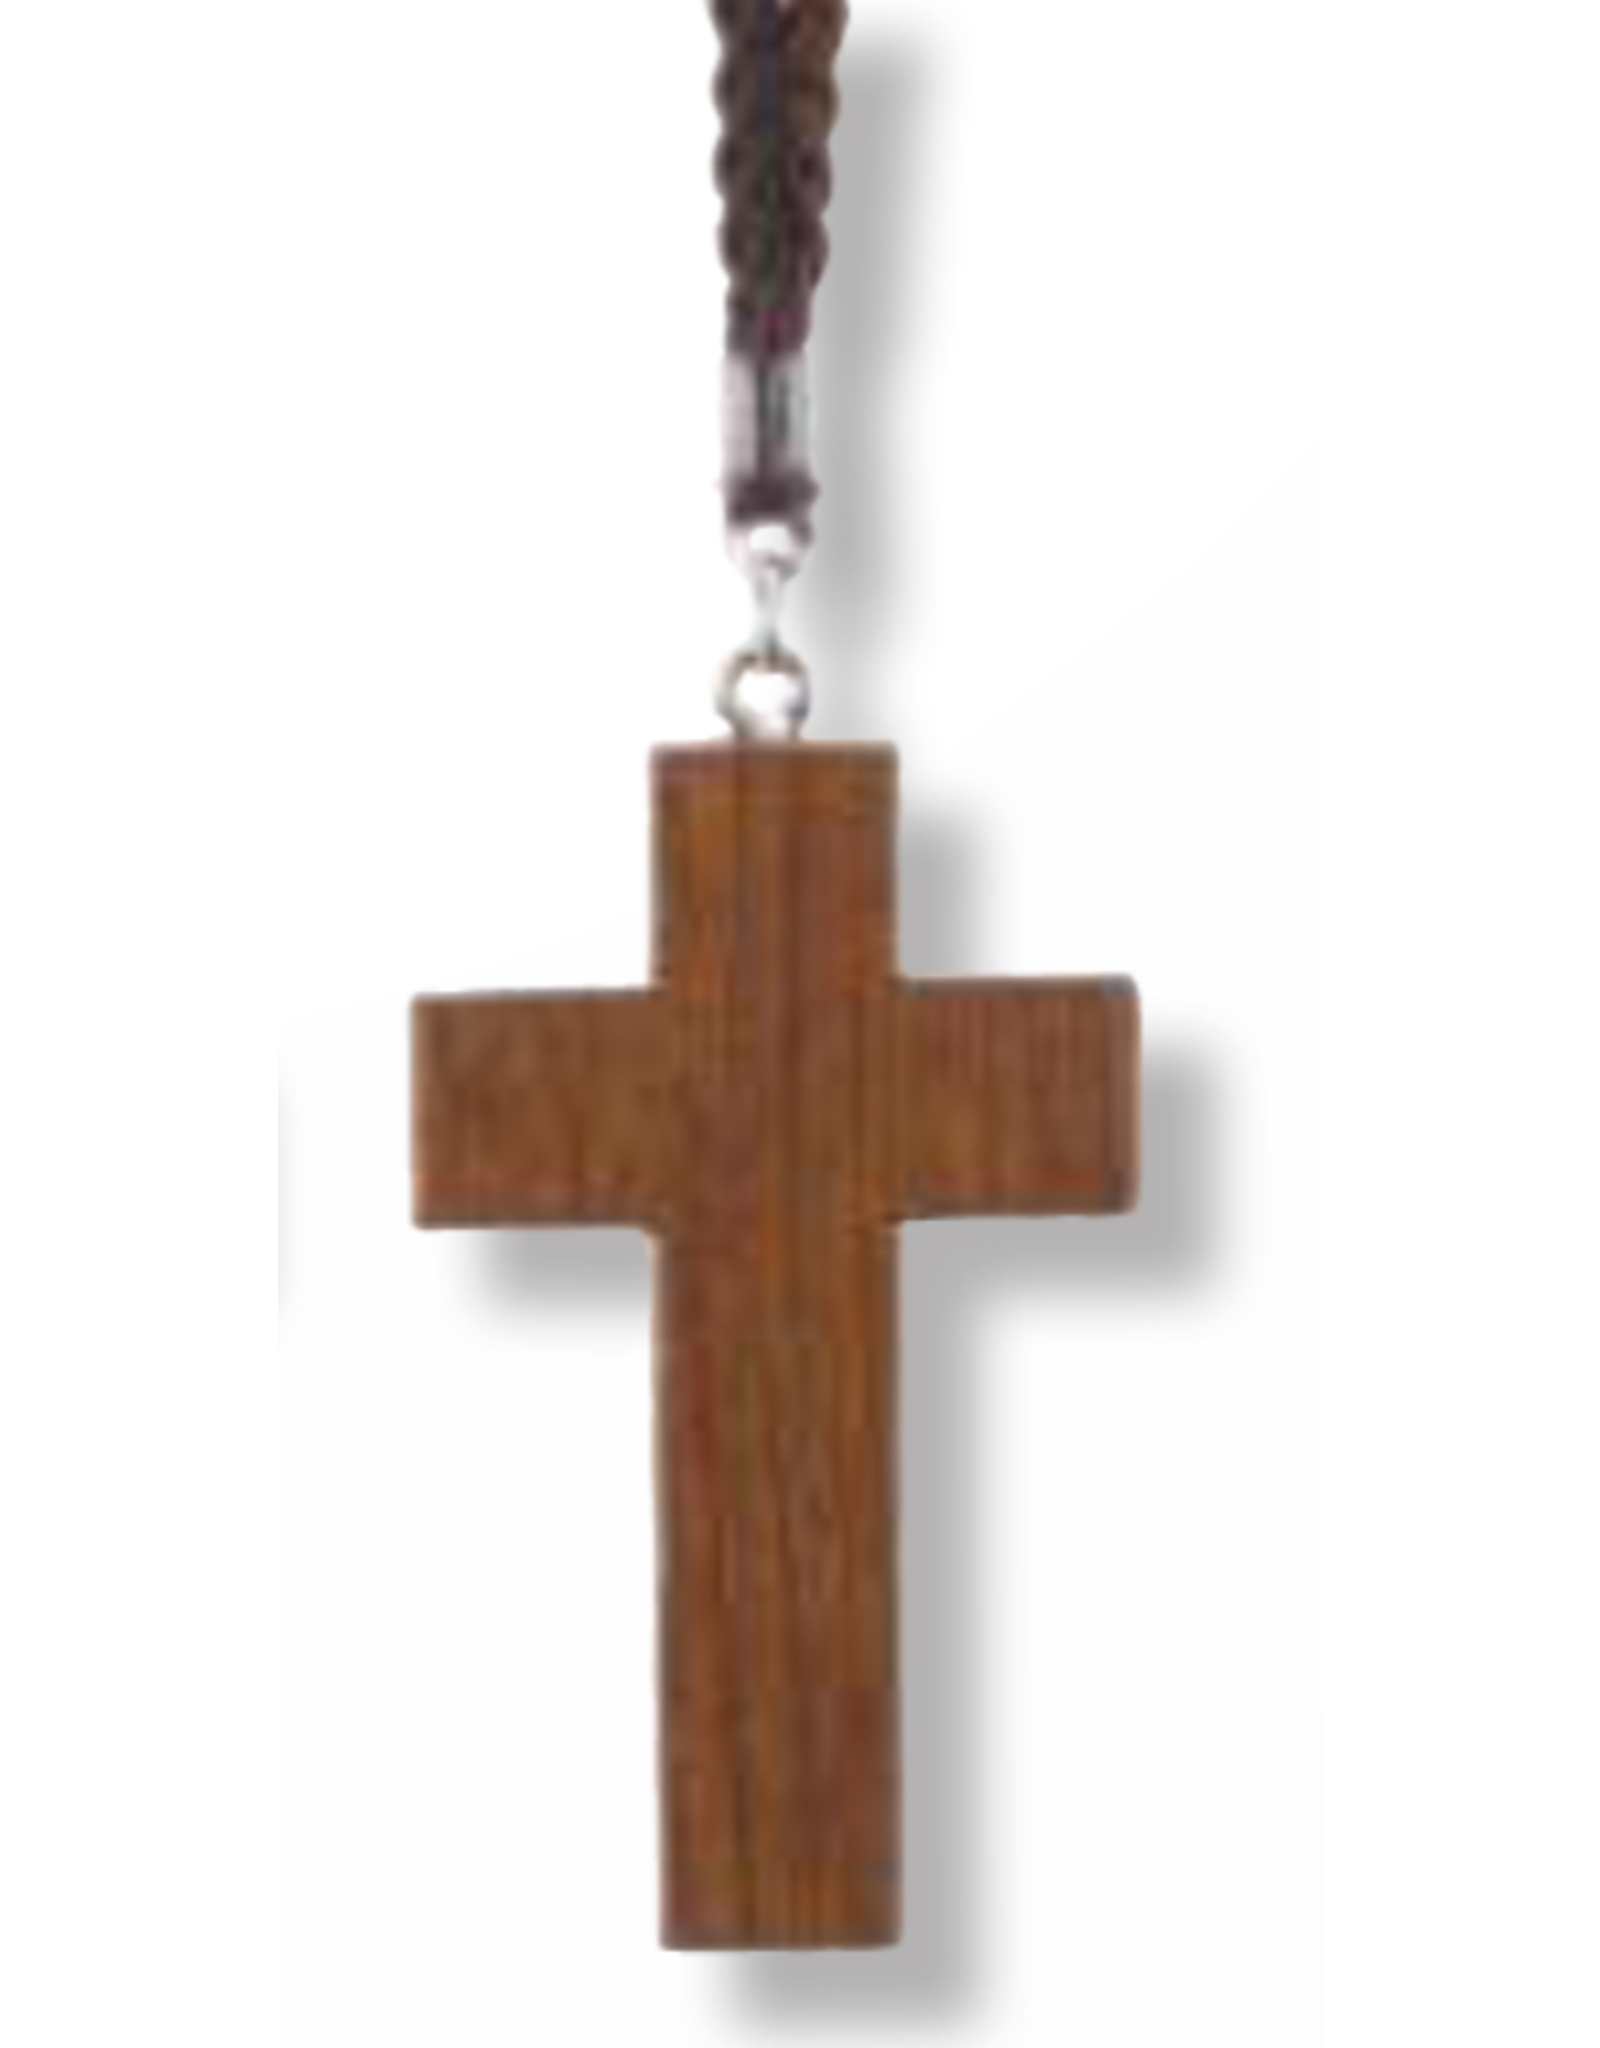 Religious Art Pendant - Brown Cross (2" Cross, 30" Cord)